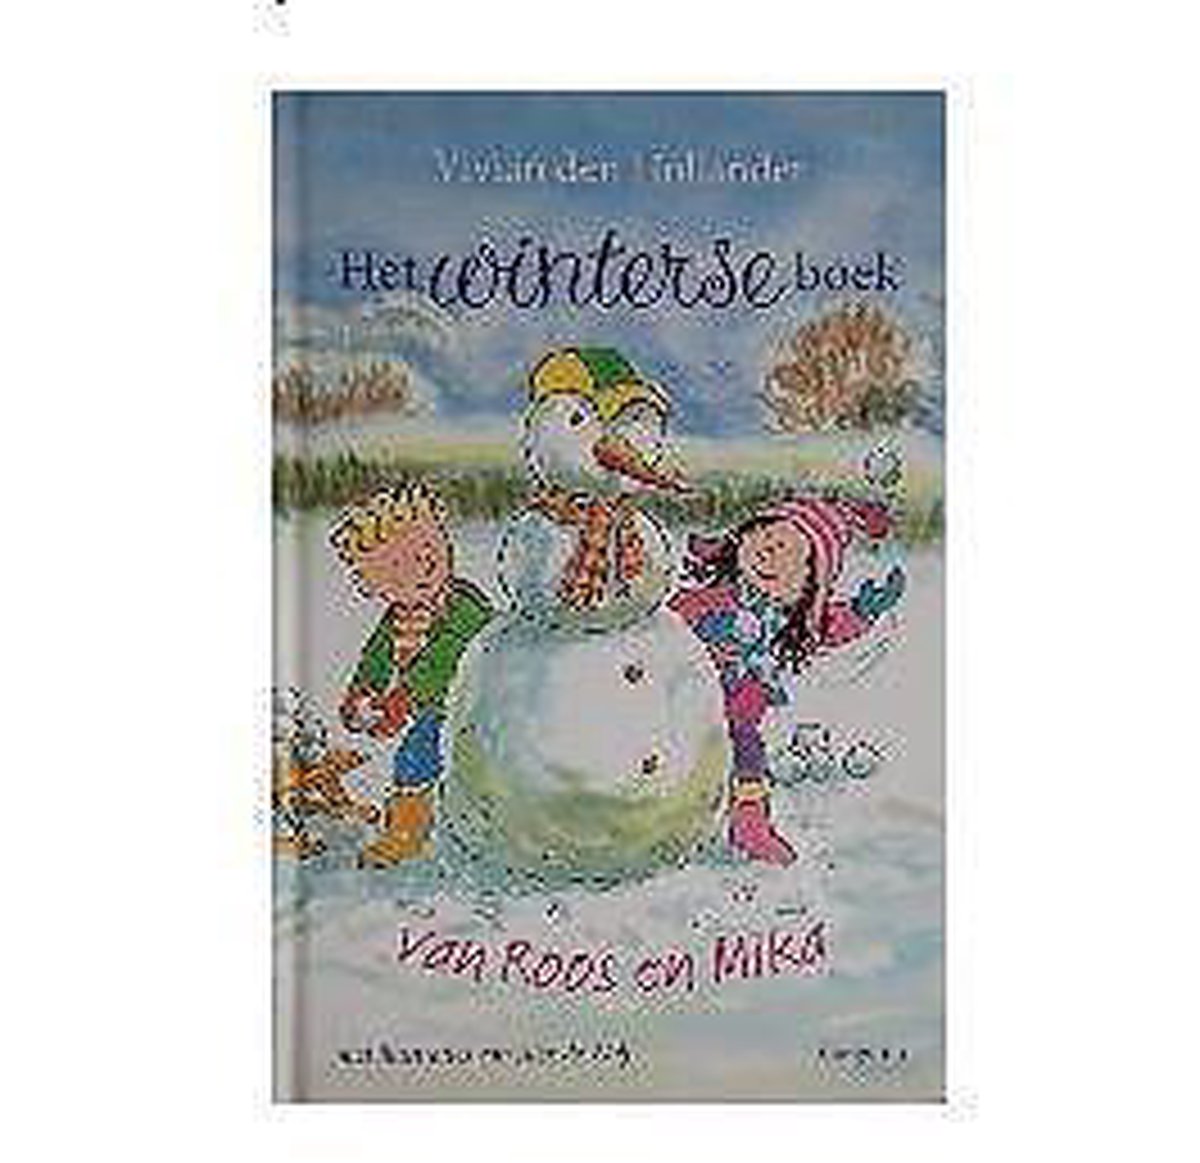 Het winterse boek van Roos en Mika